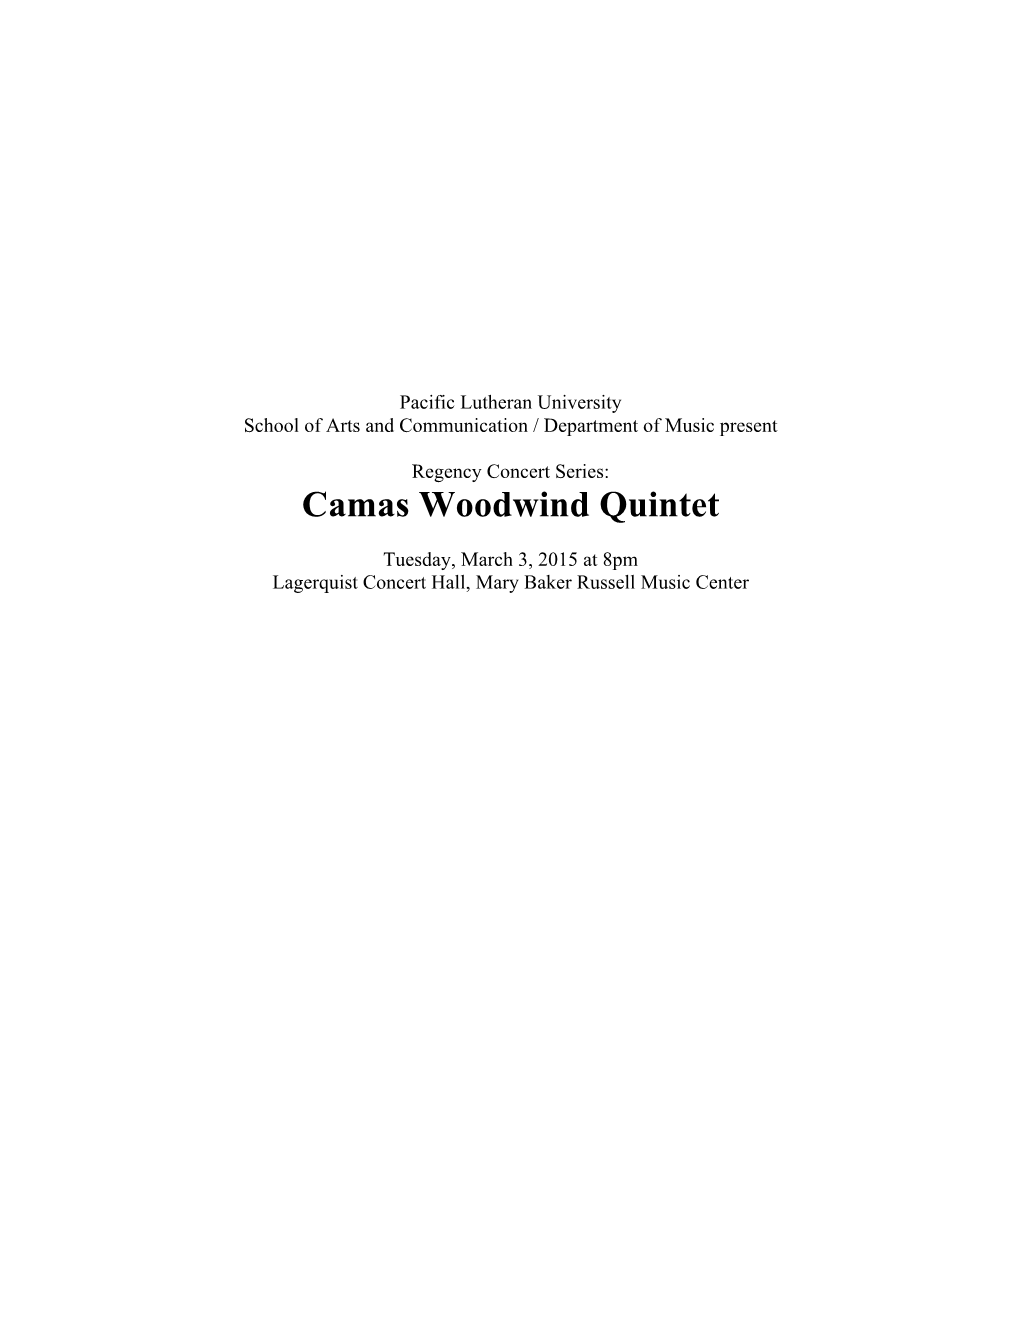 Camas Woodwind Quintet